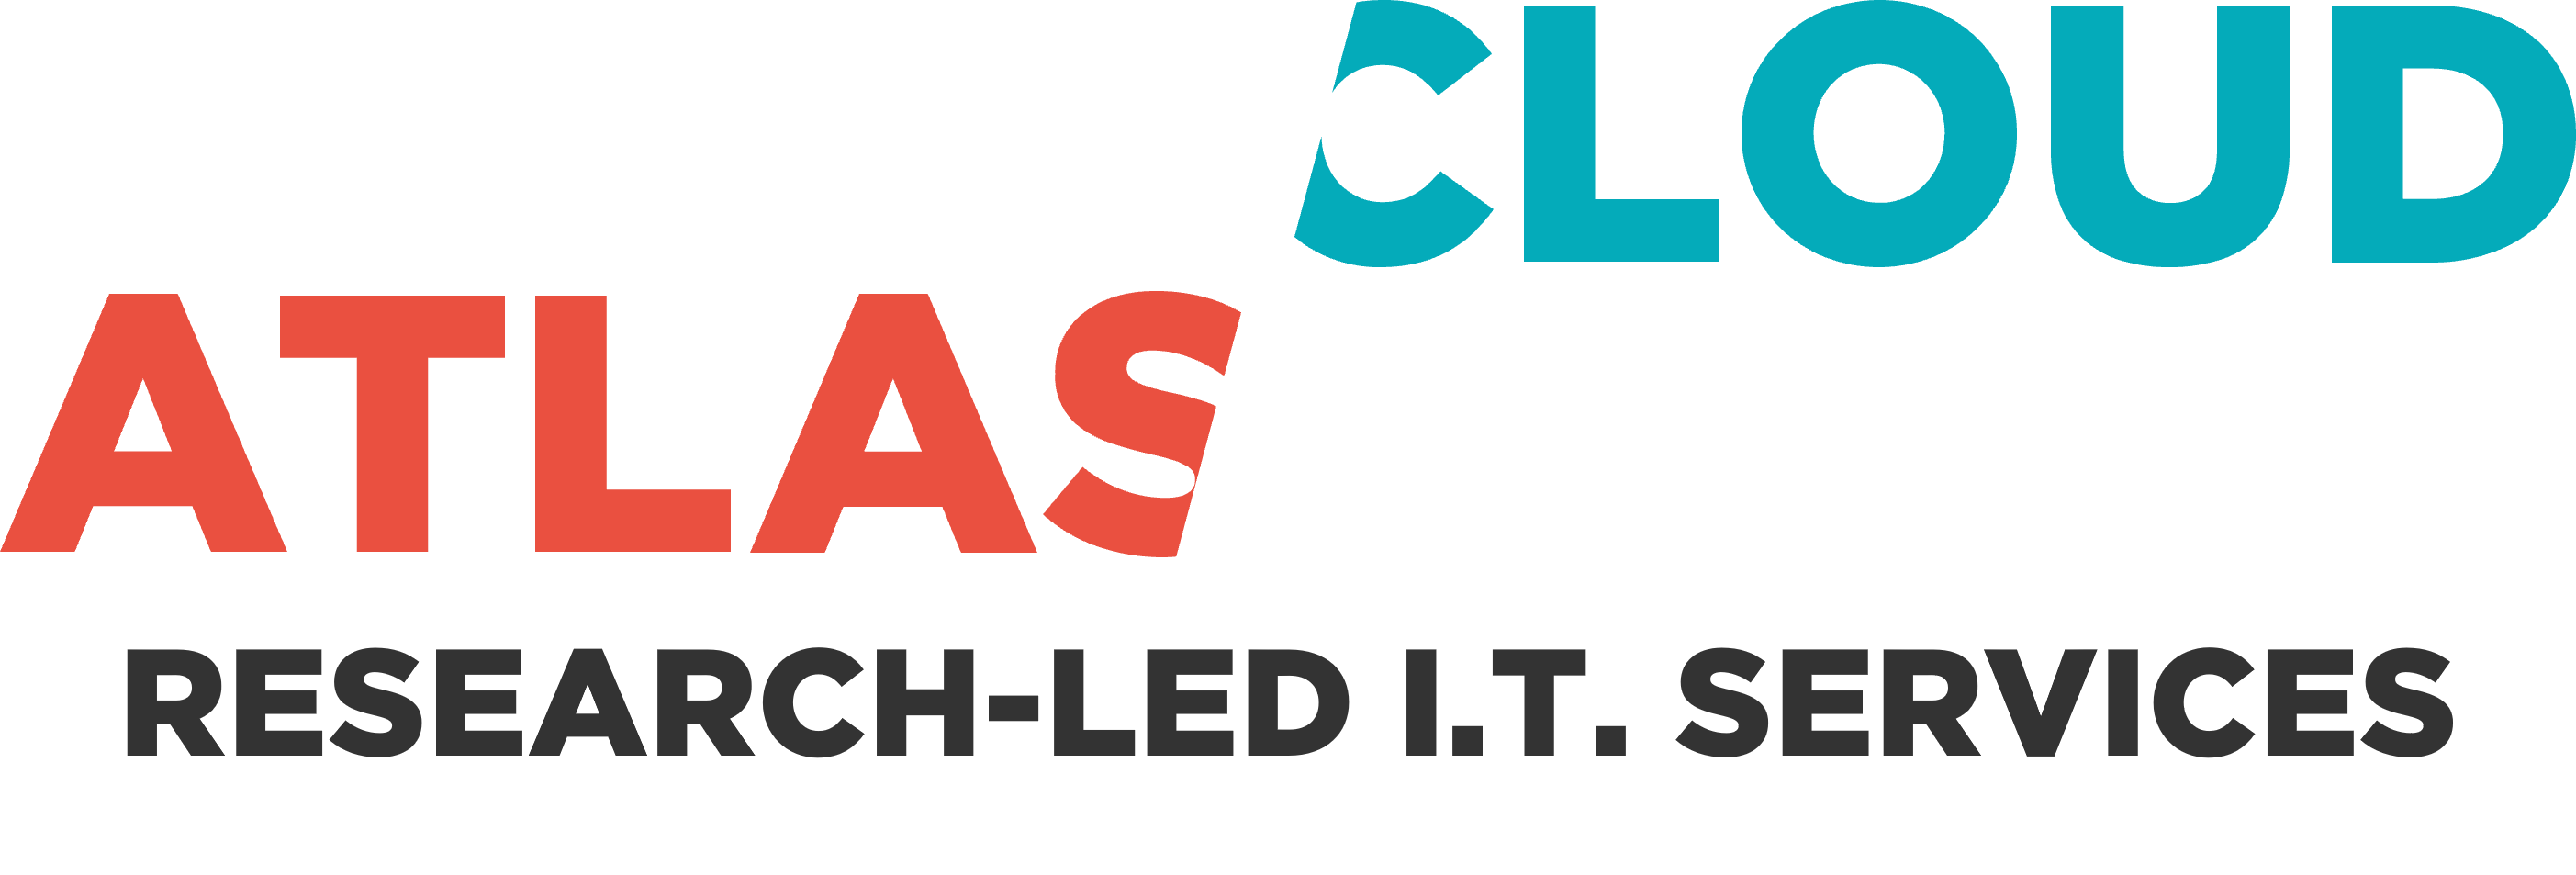 logo for Atlas Cloud